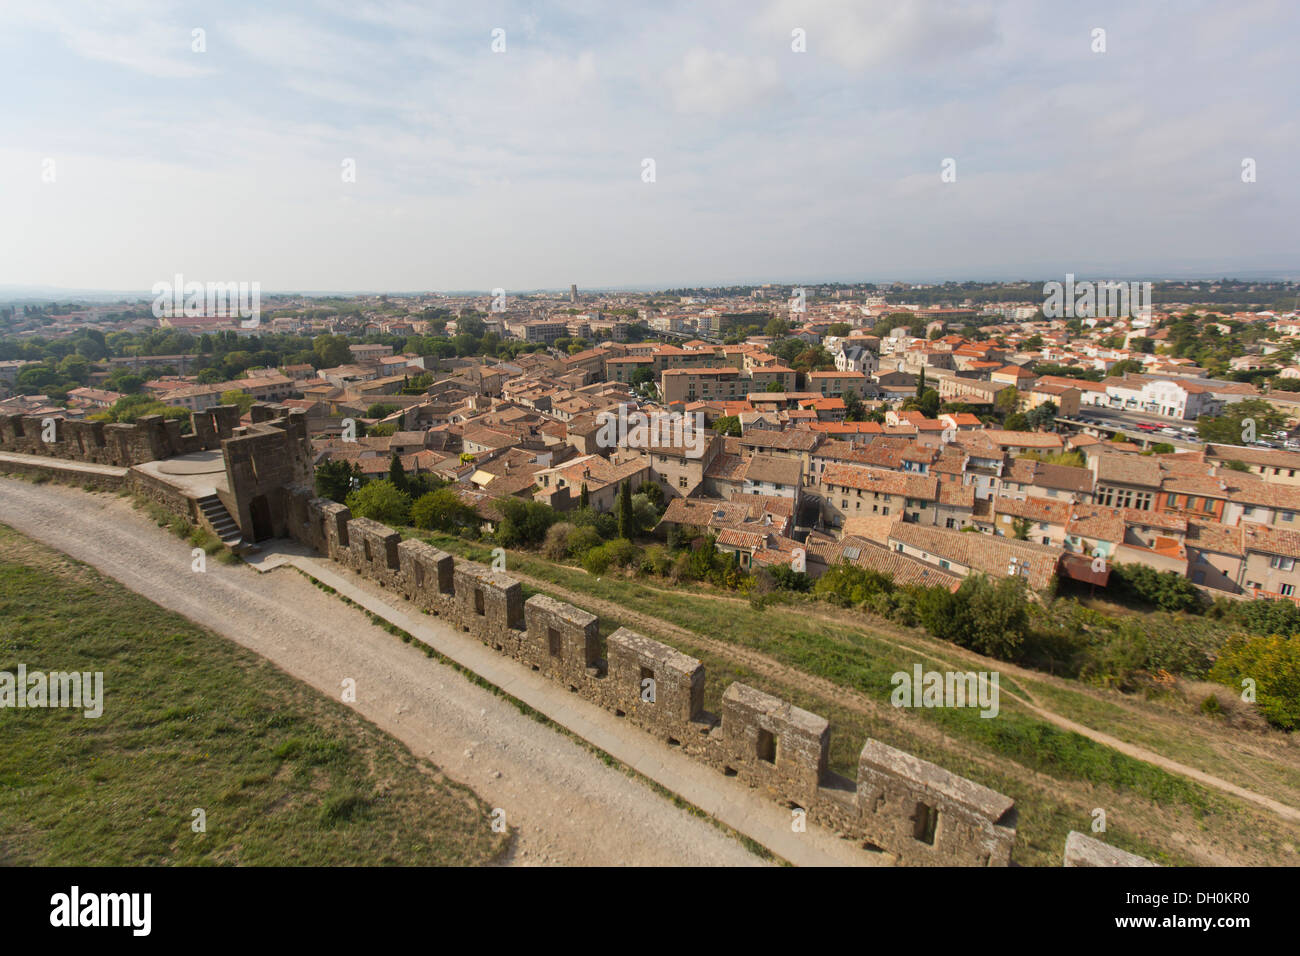 Vista desde la ciudad medieval fortificada de Carcassonne en la Basse Ville, Les Remparts 138824 Carcassonne Foto de stock